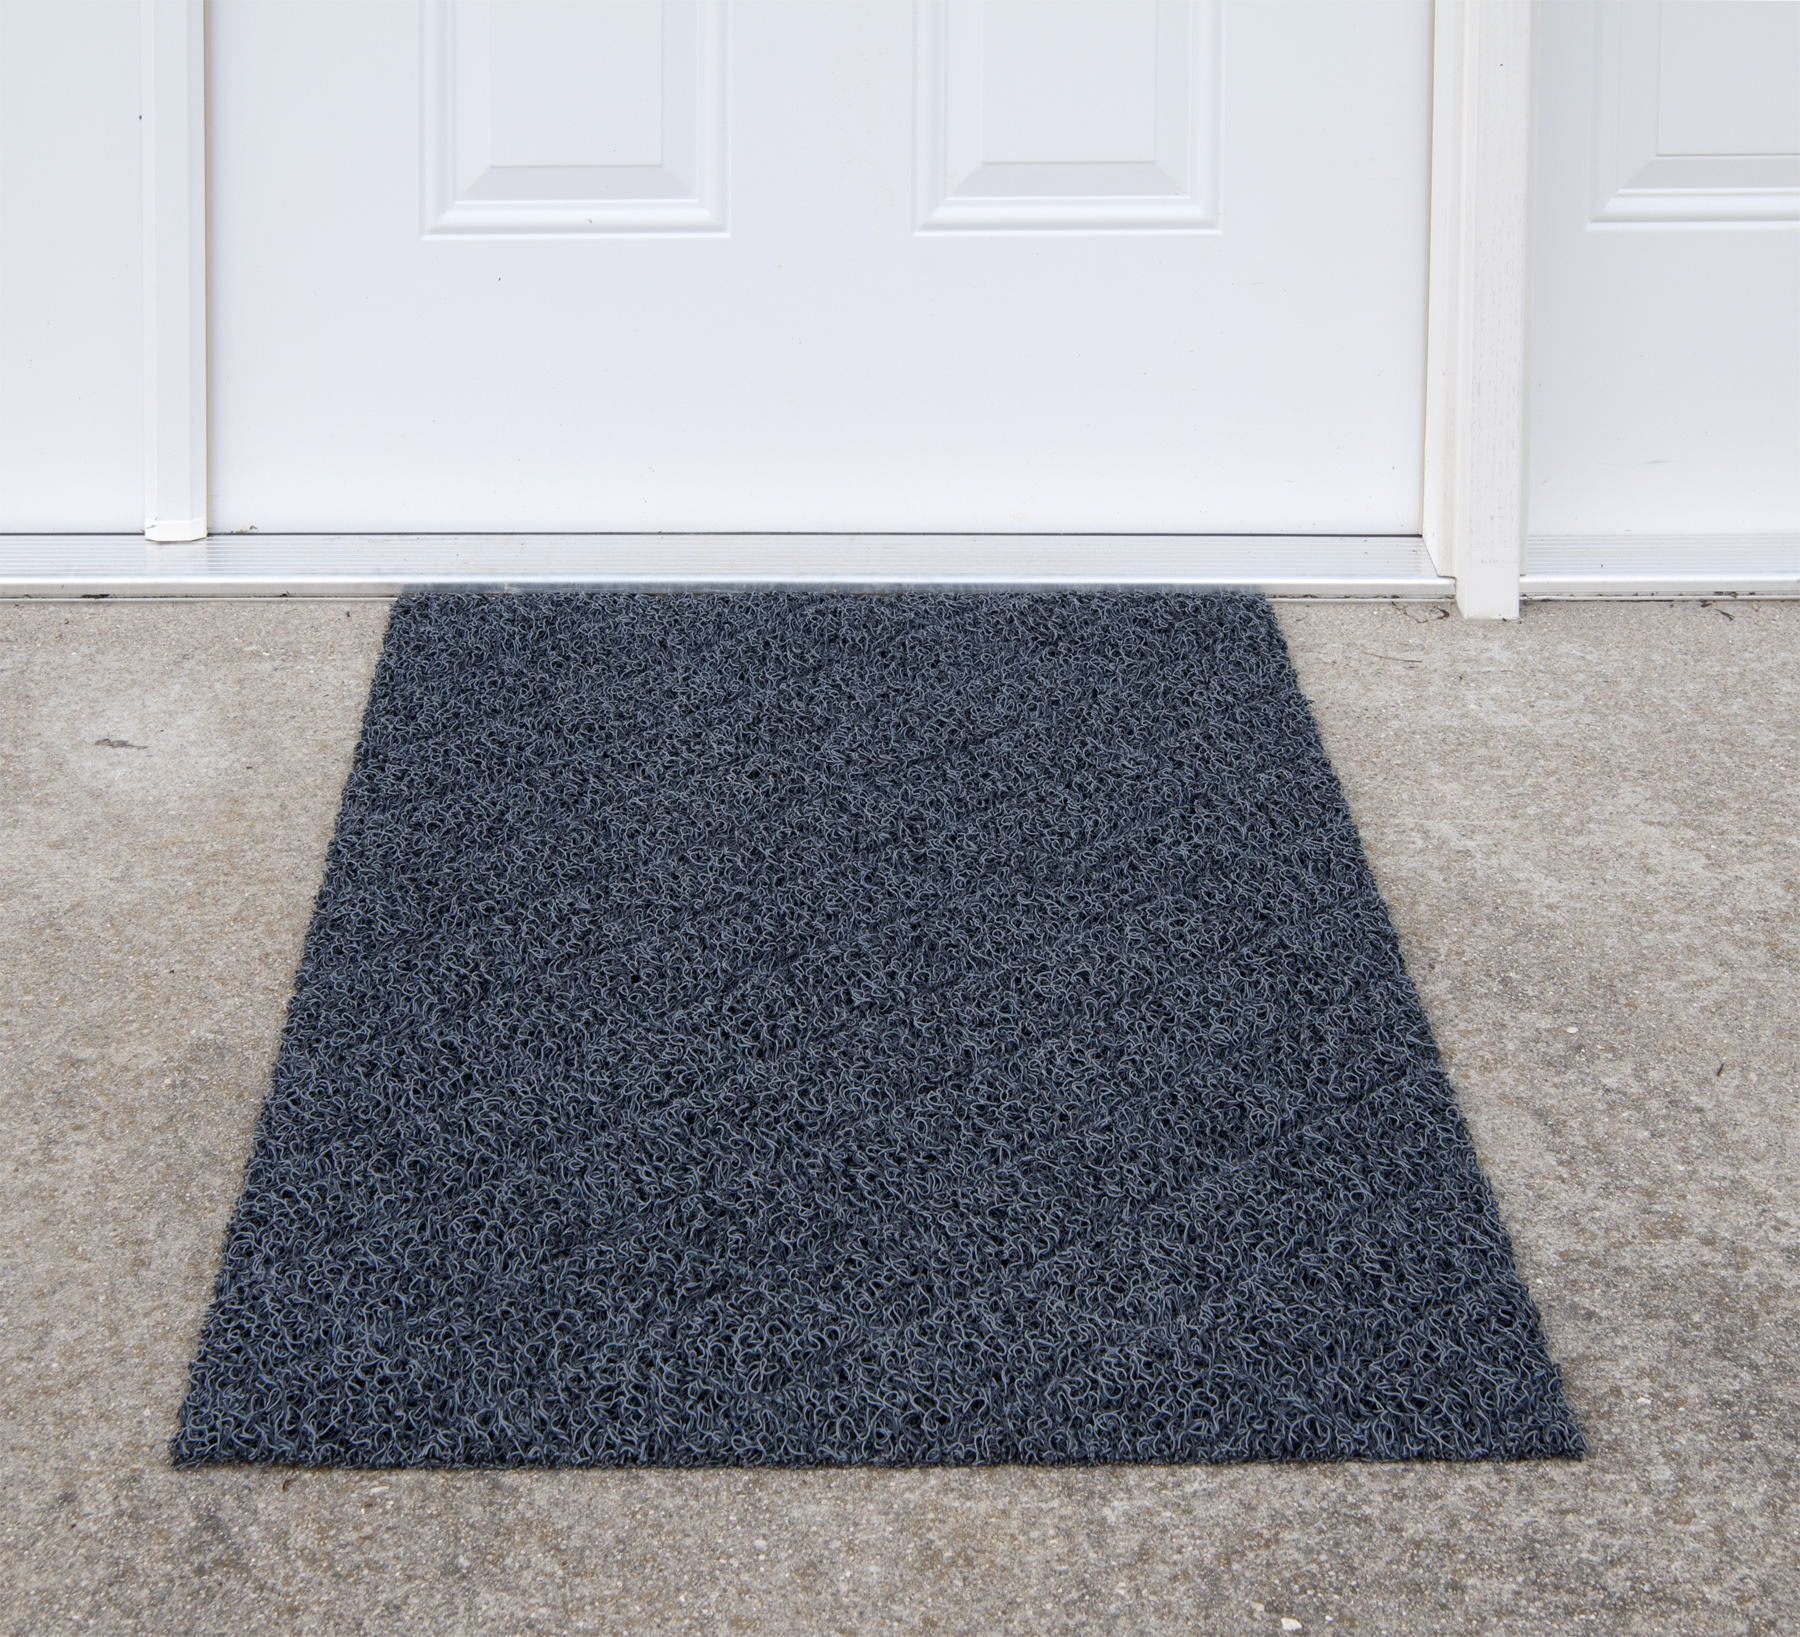 ViSpa All Season Outdoor Floor Mats are slip-resistant scraper mats that stop dirt, moisture, salt and calcium from entering your home or building